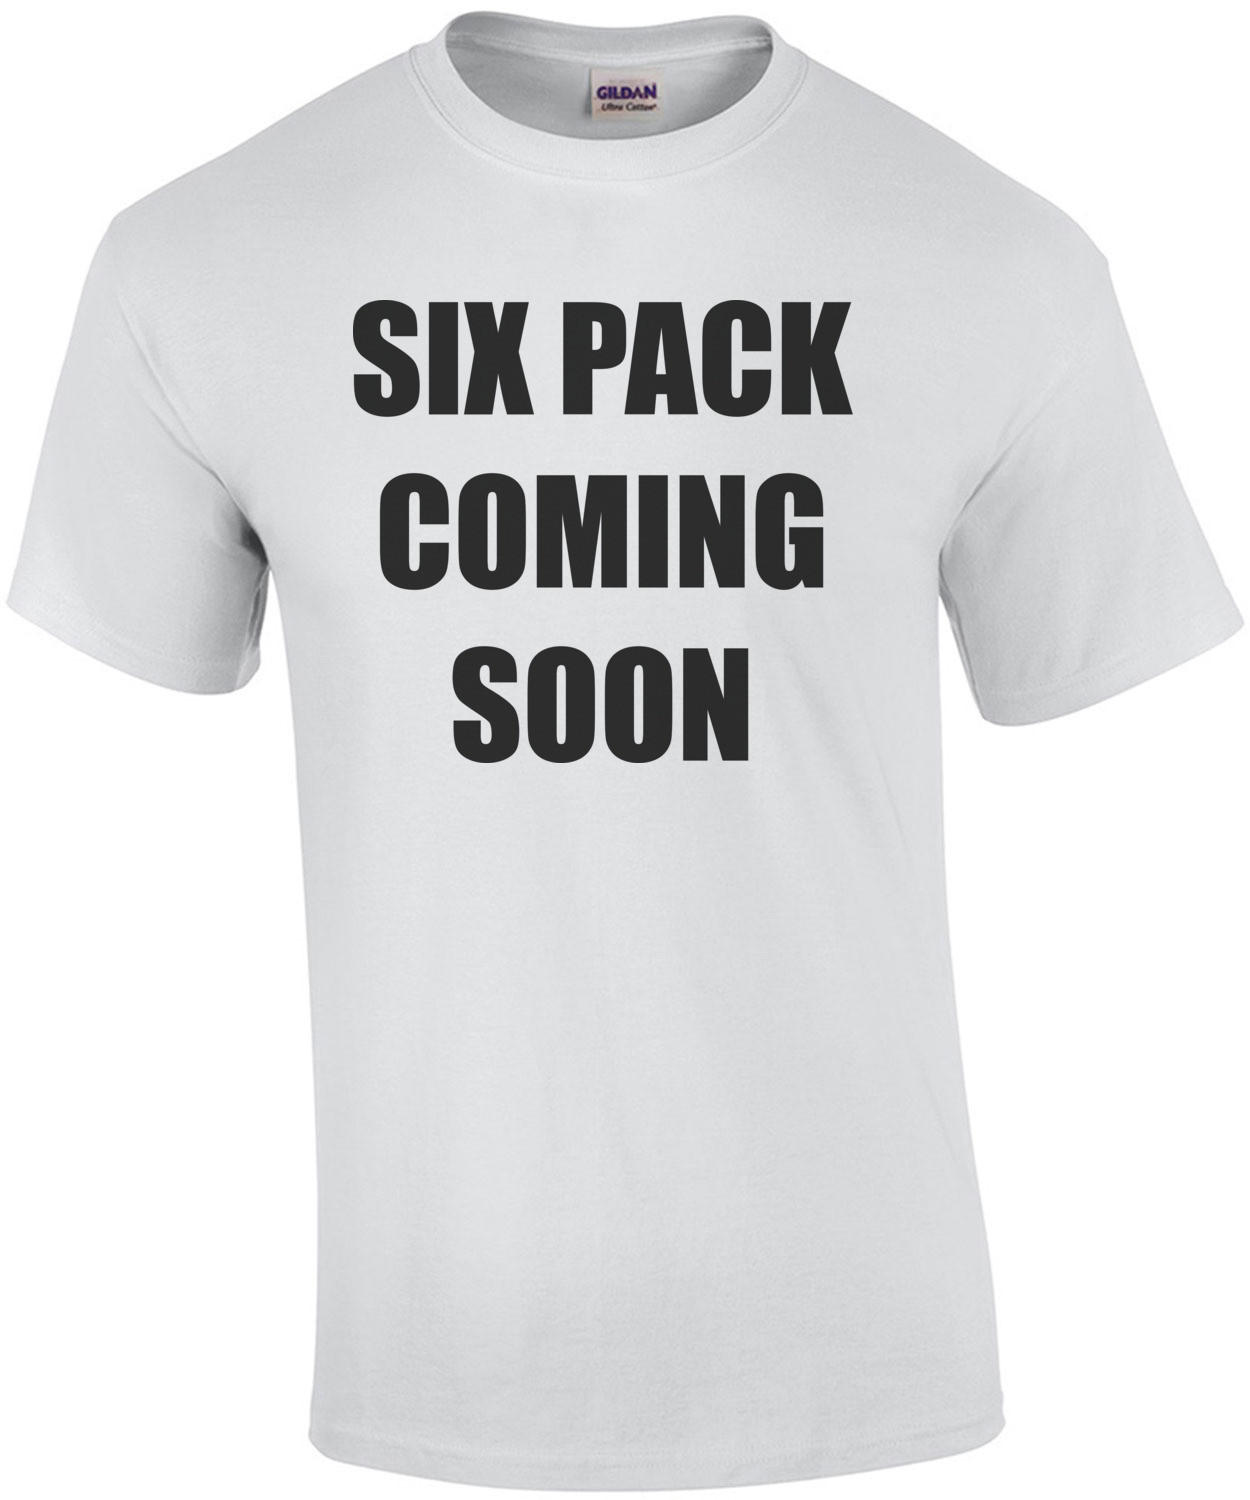 SIX PACK COMING SOON Shirt